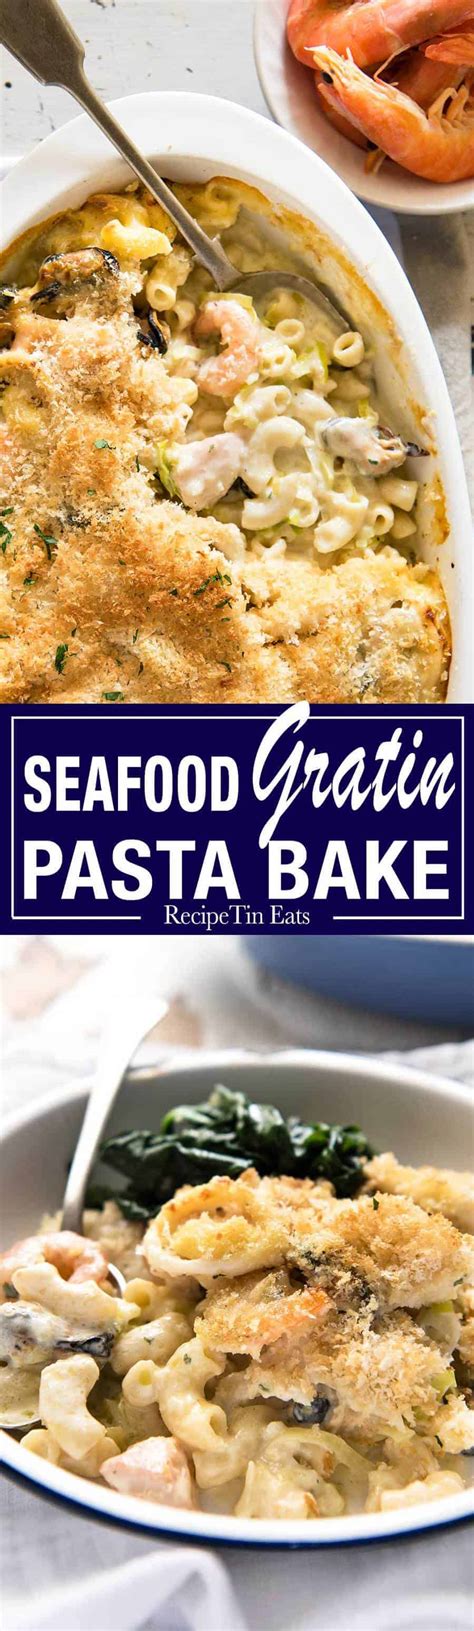 7) to serve seafood bake garnish parsley and lemon twist. Seafood Gratin Pasta Bake | RecipeTin Eats